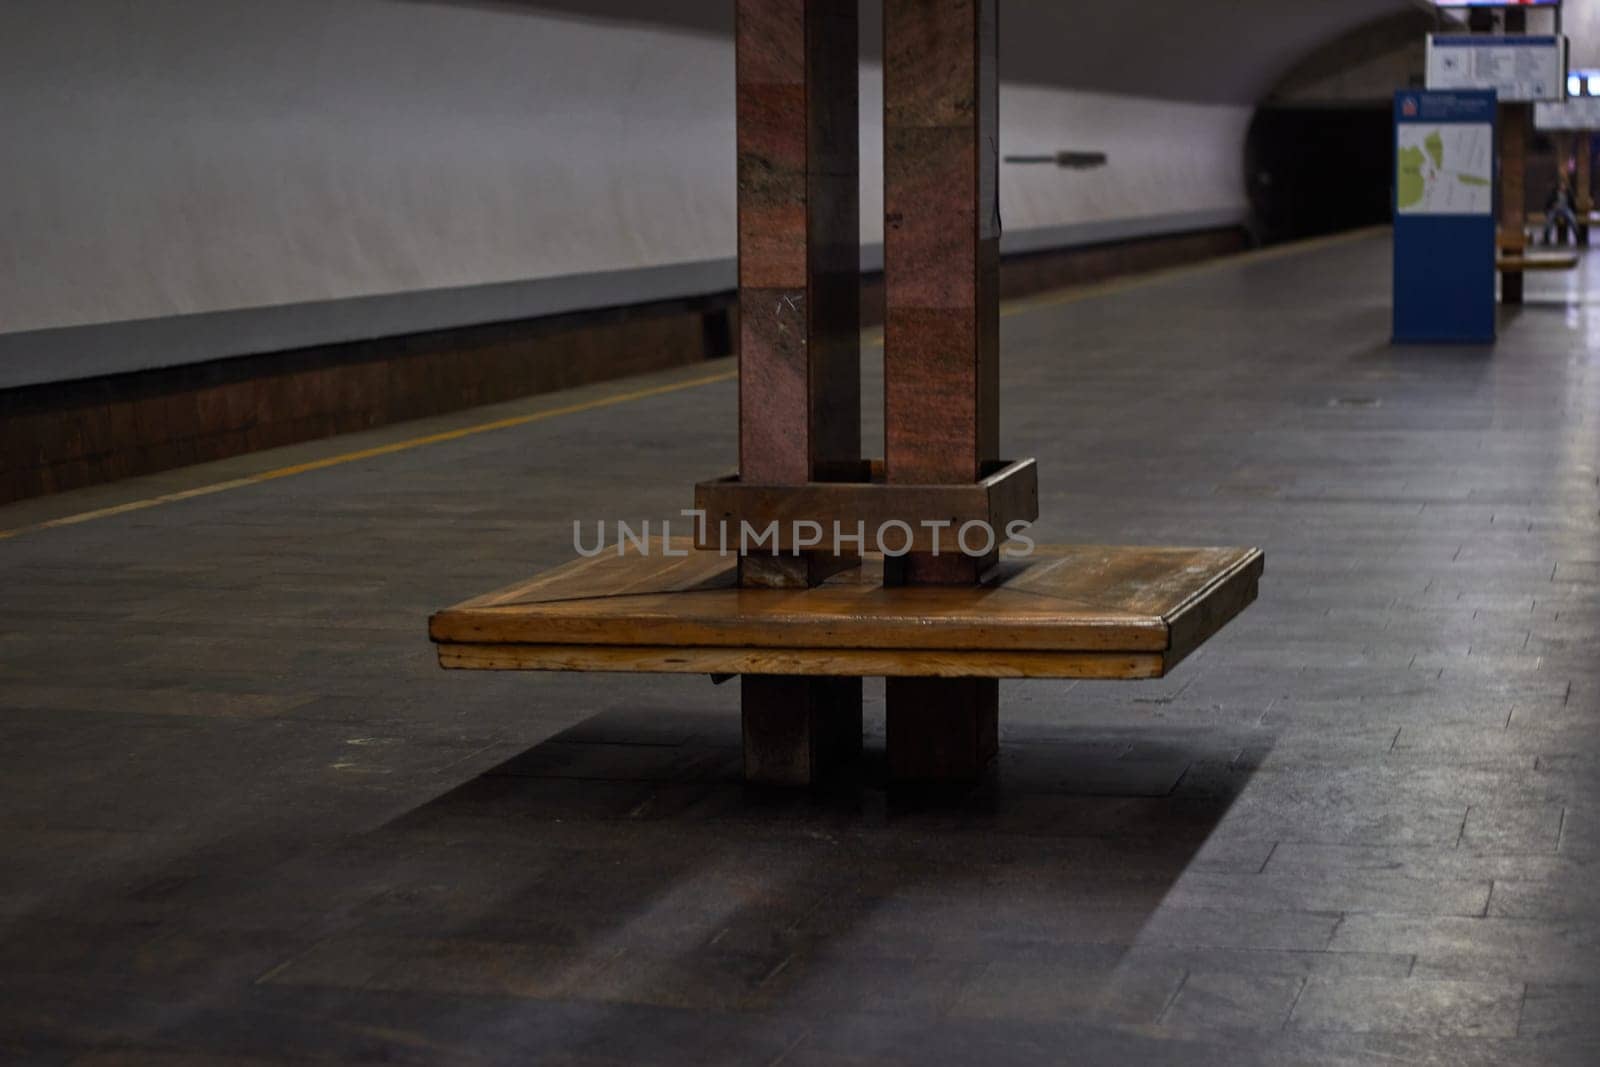 Metro benches for rest. Underground Metropolitan a by electrovenik